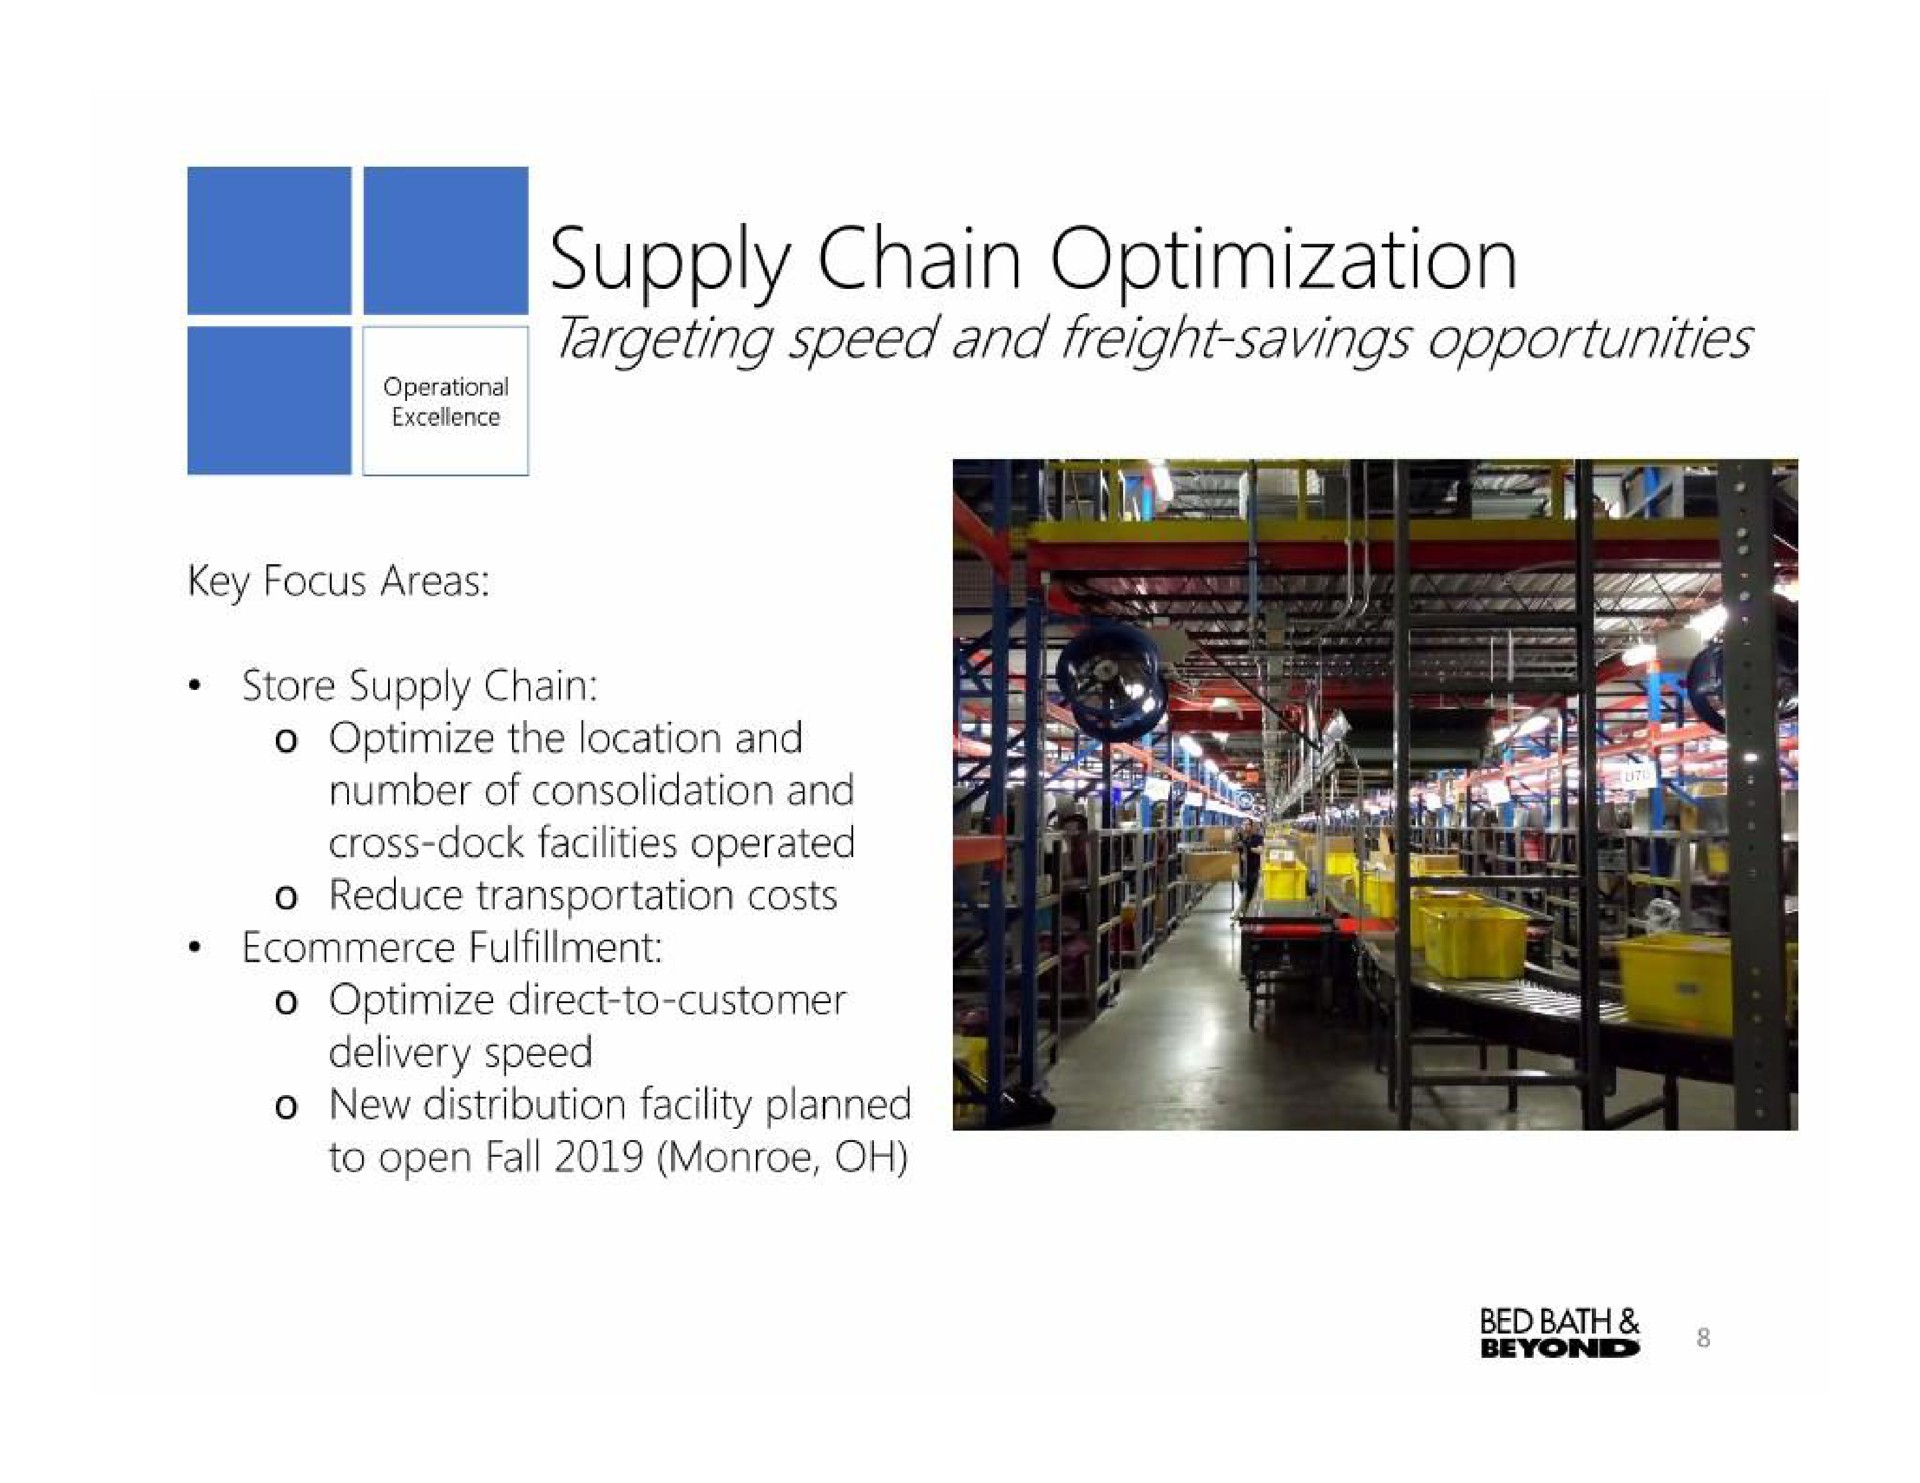 supply chain optimization | Bed Bath & Beyond